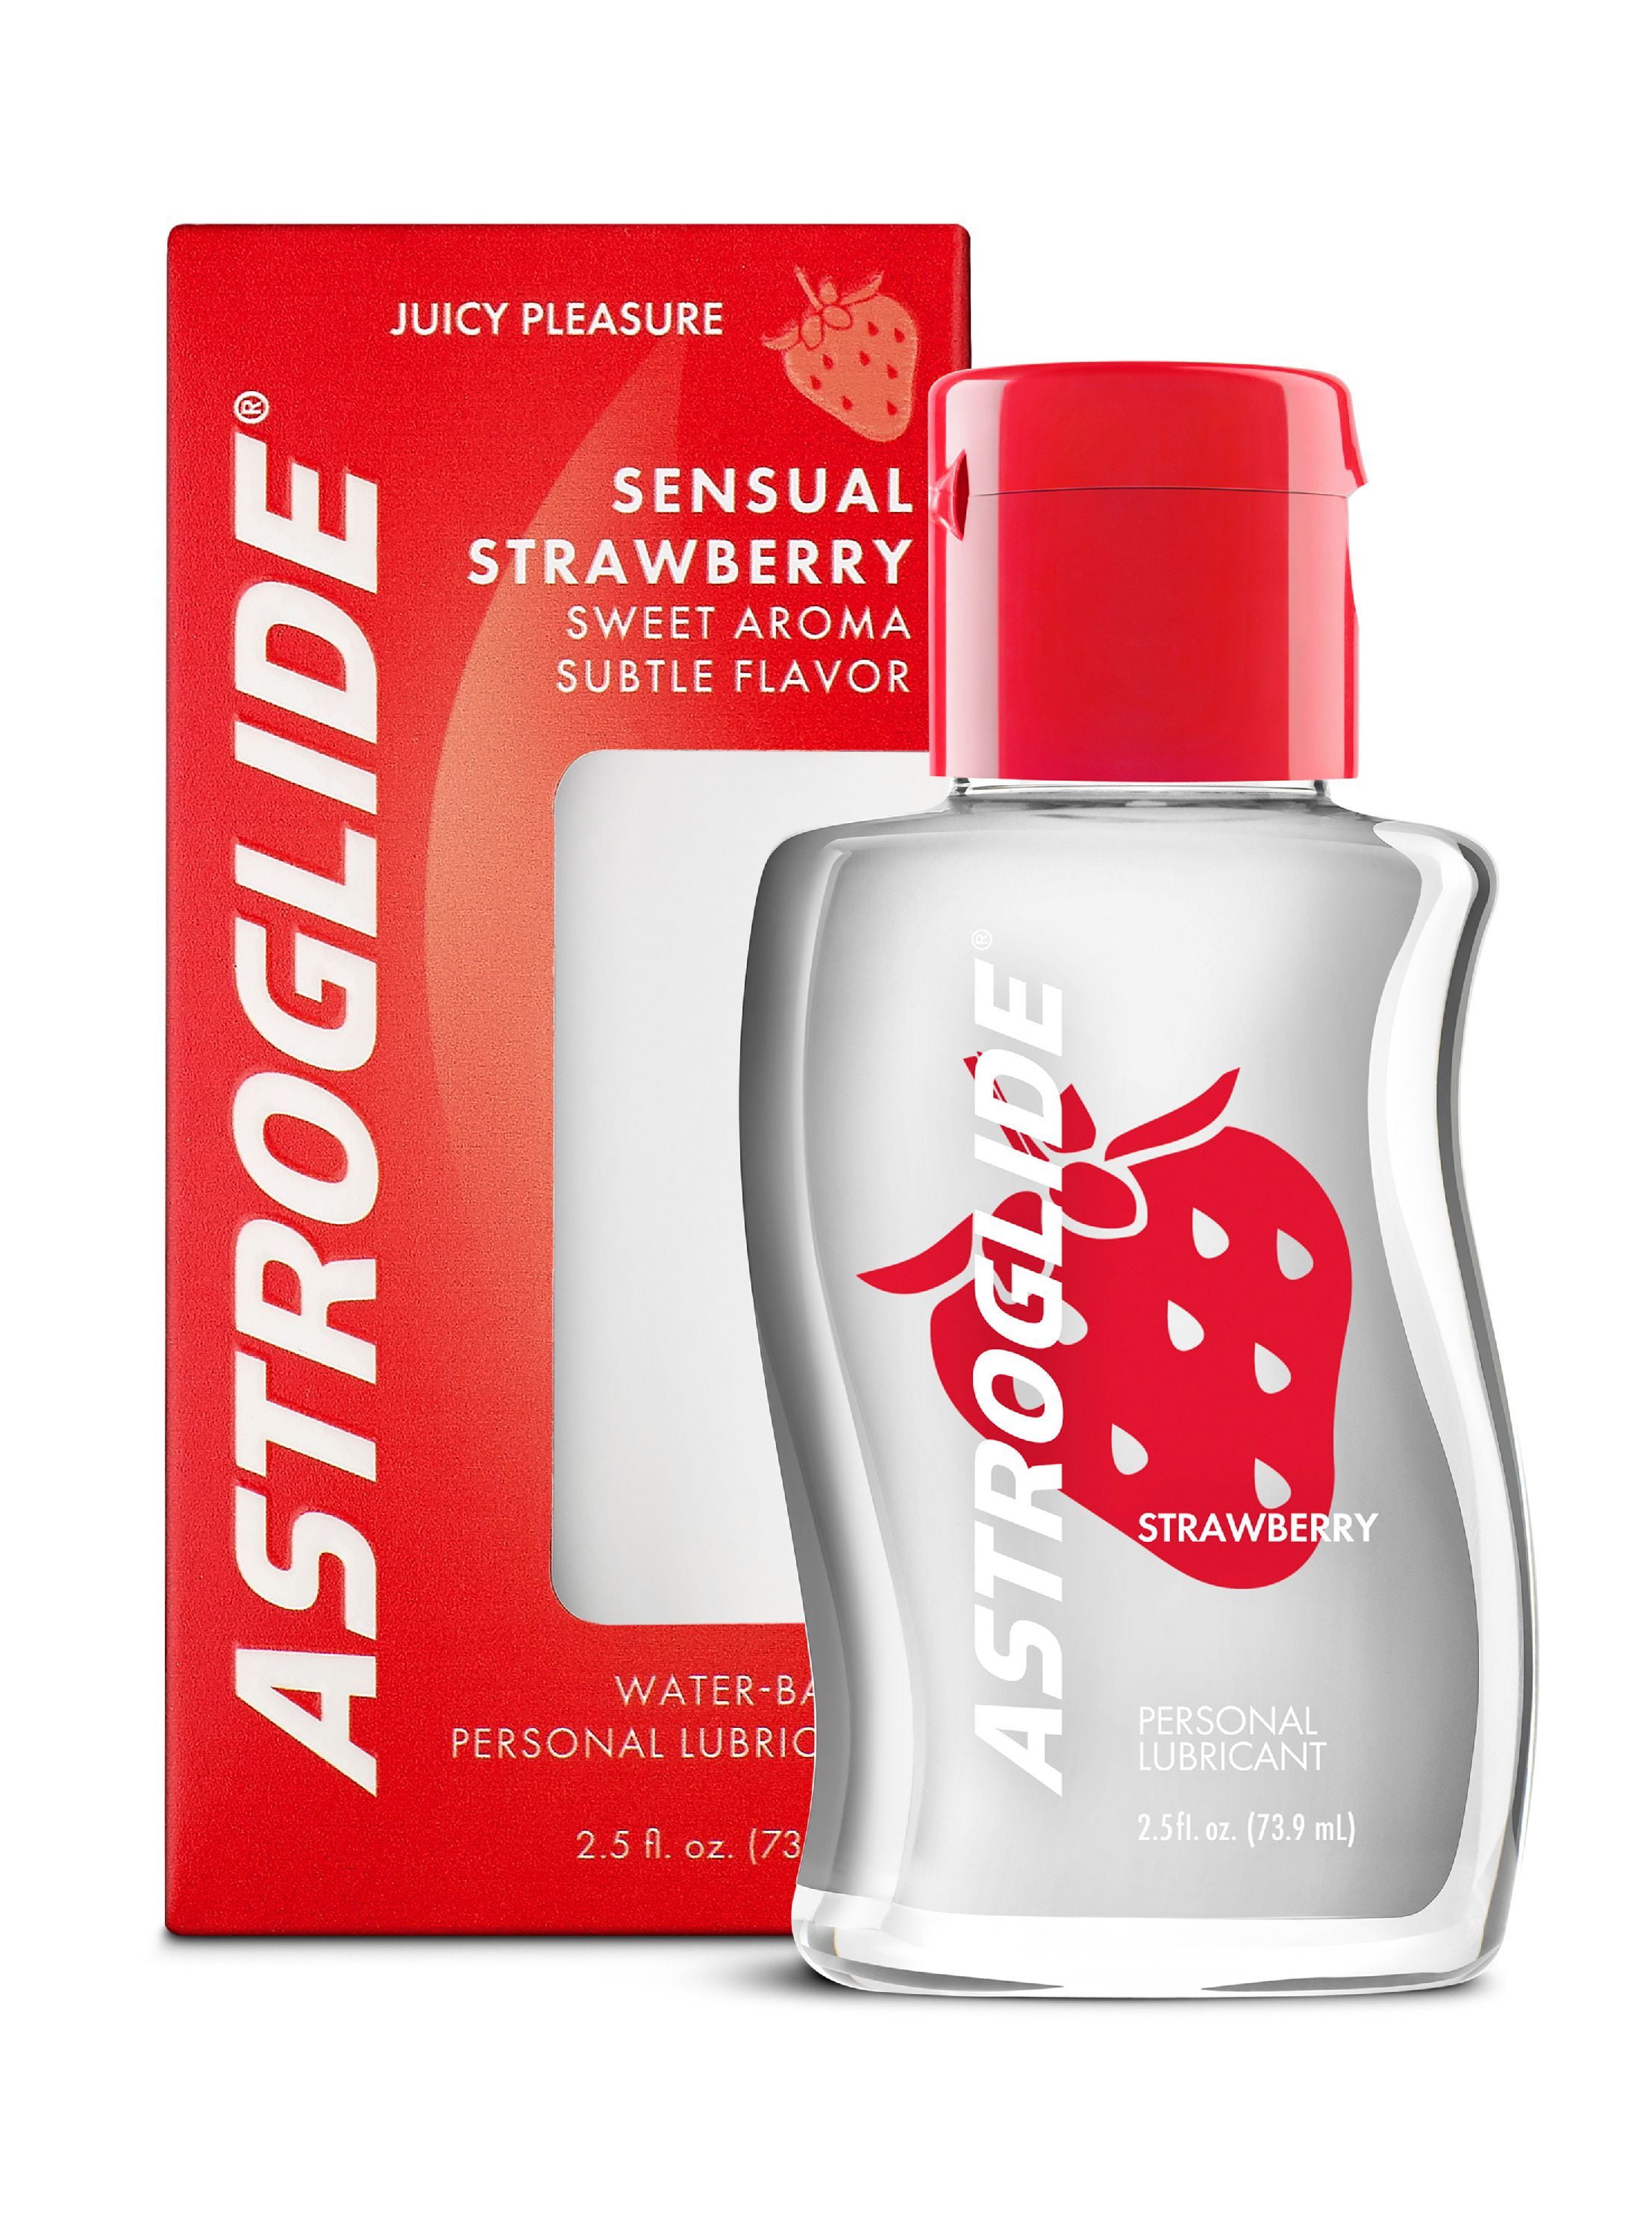 Astroglide Sensual Strawberry Liquid, Water Based Personal Lubricant, Strawberry Flavored, 2.5 oz